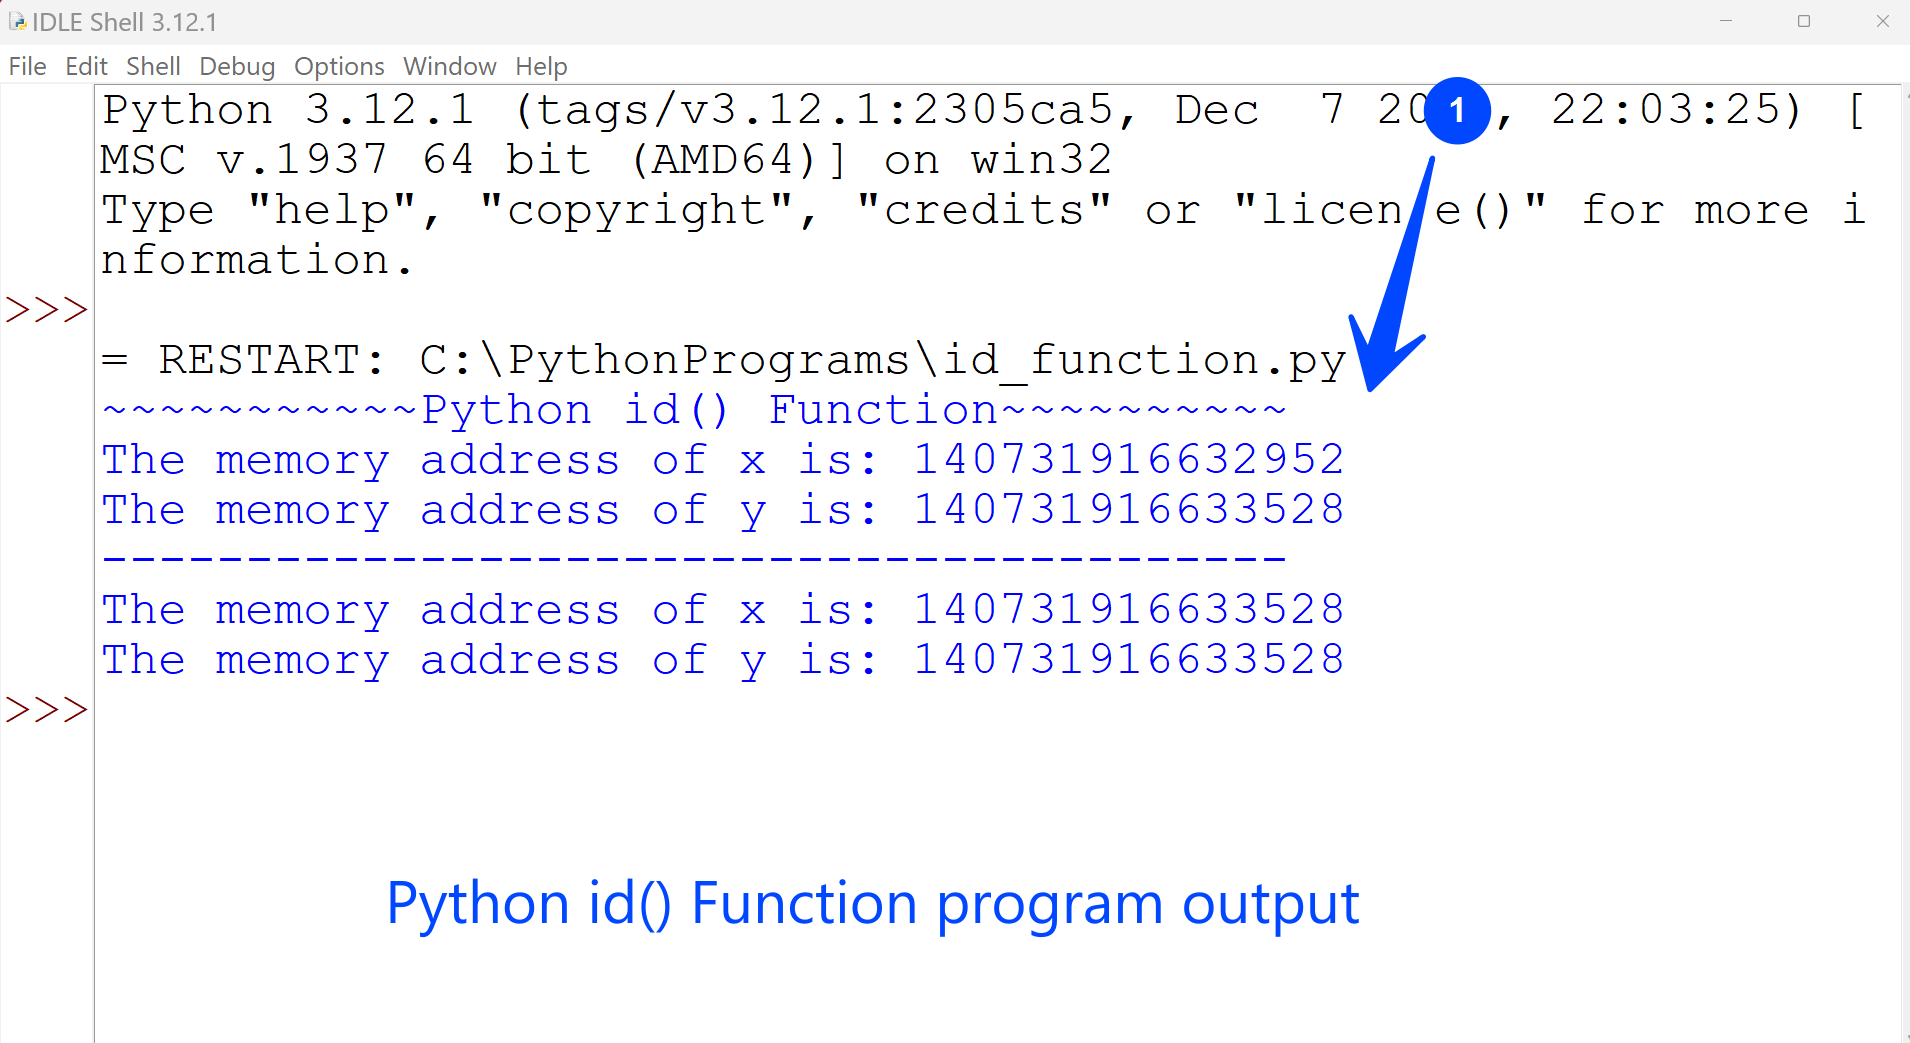 Python id function program output